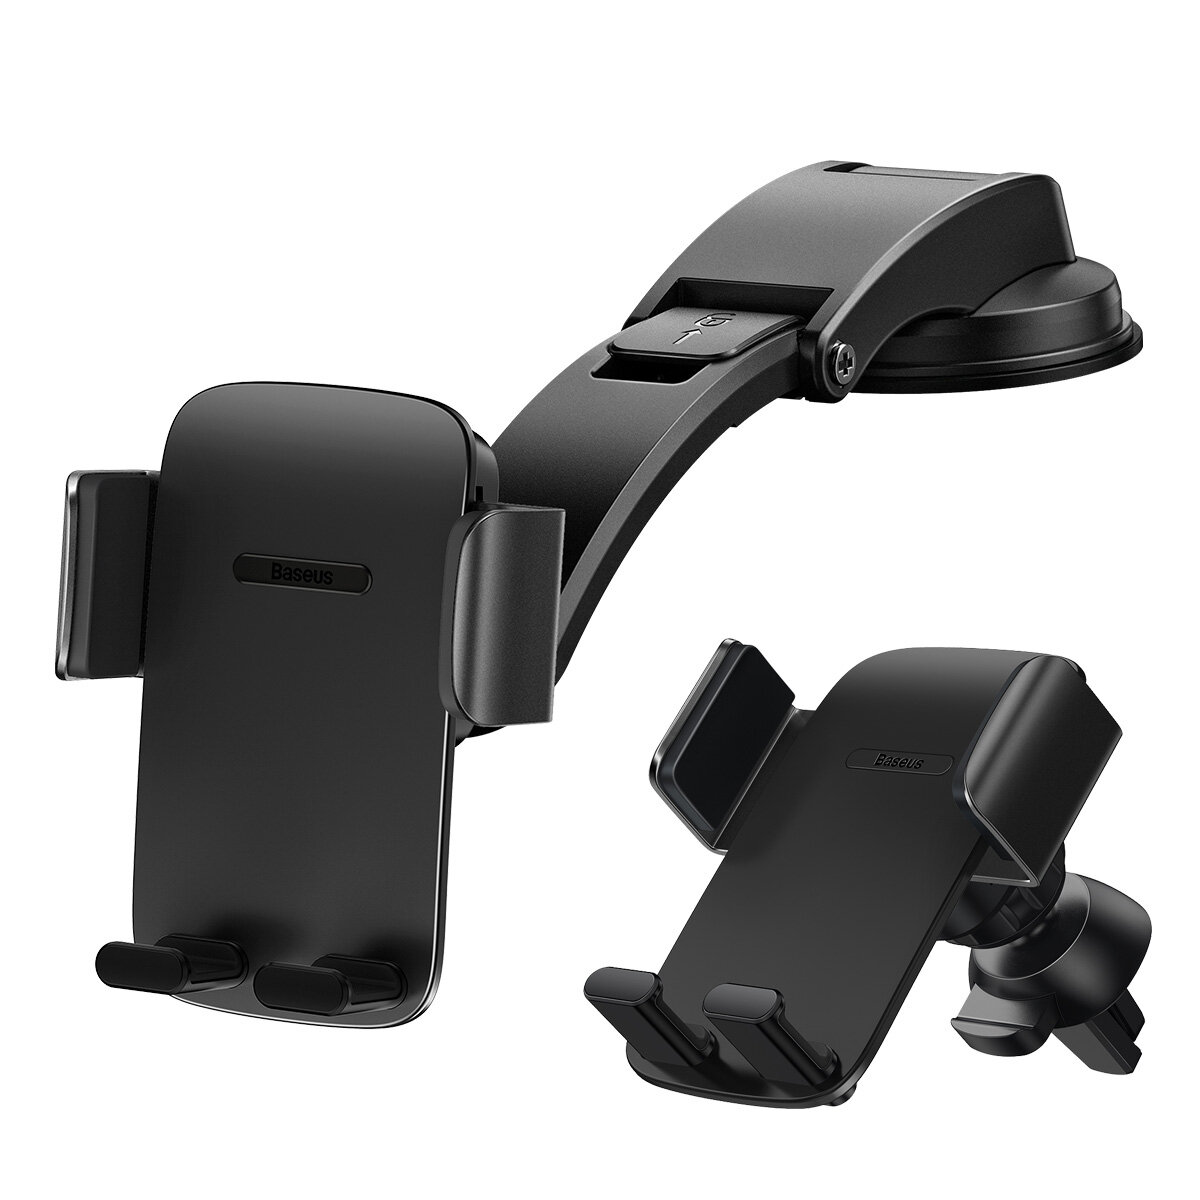 Baseus Upgrade Universal 360° Rotation Silent Car Air Vent/ Dashboard Mount Phone Holder Bracket GPS Stand for 4.7-6.7 i